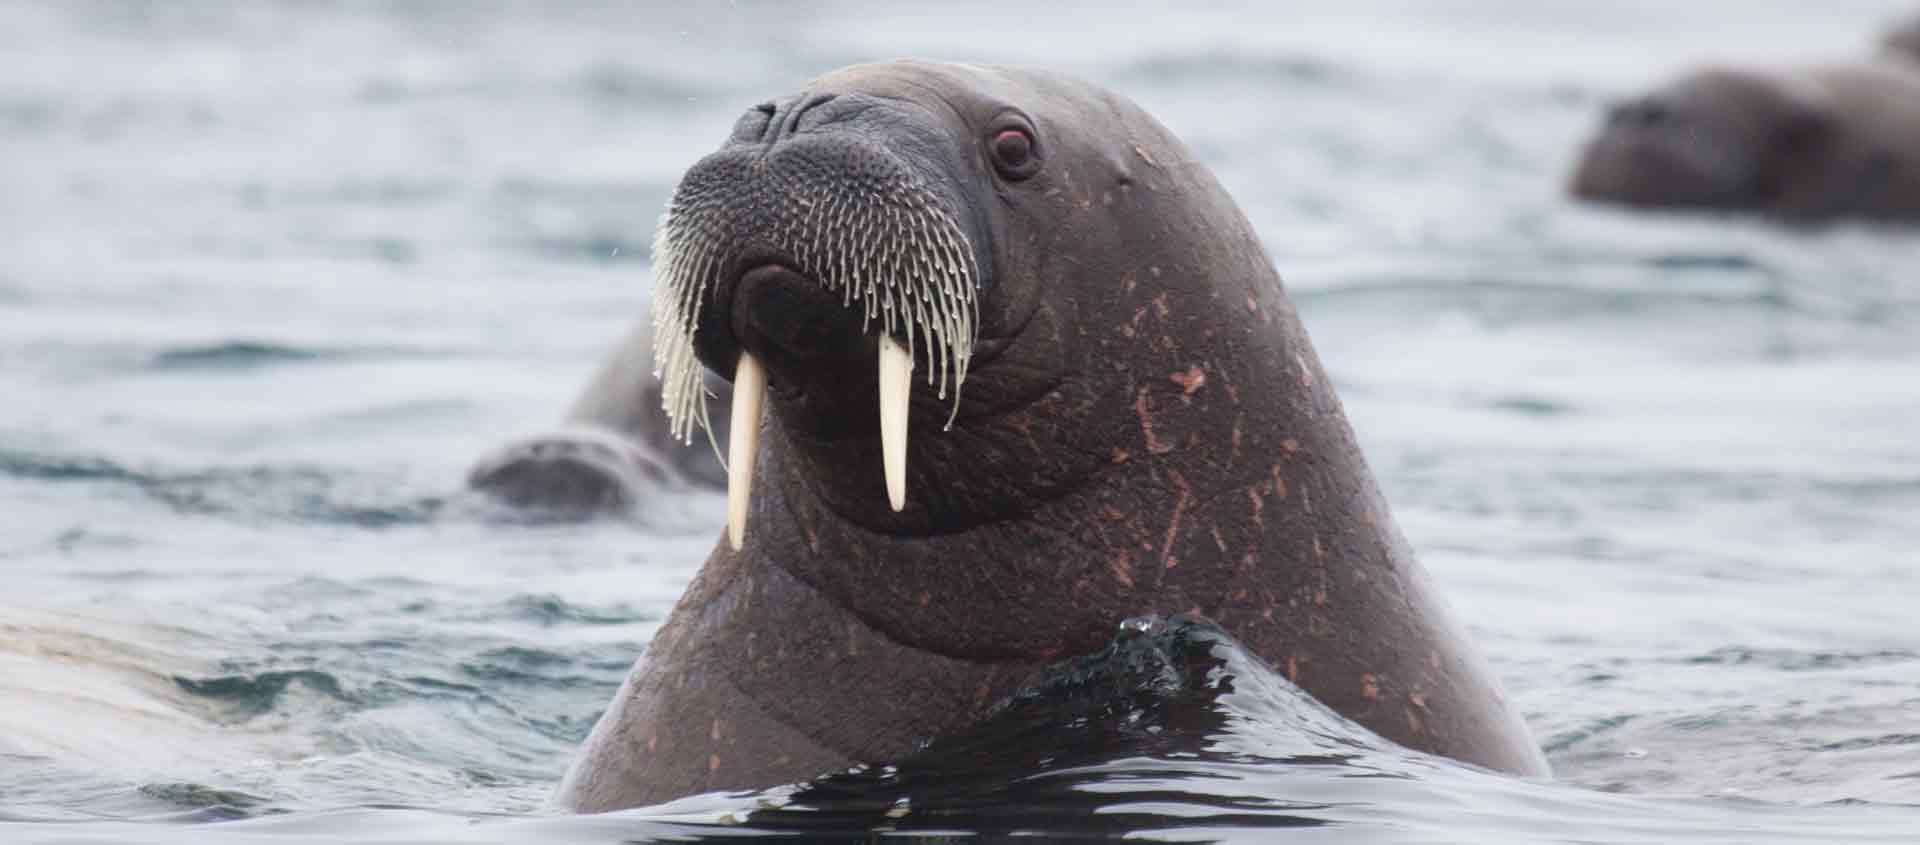 Northwest passage expedition image of walrus